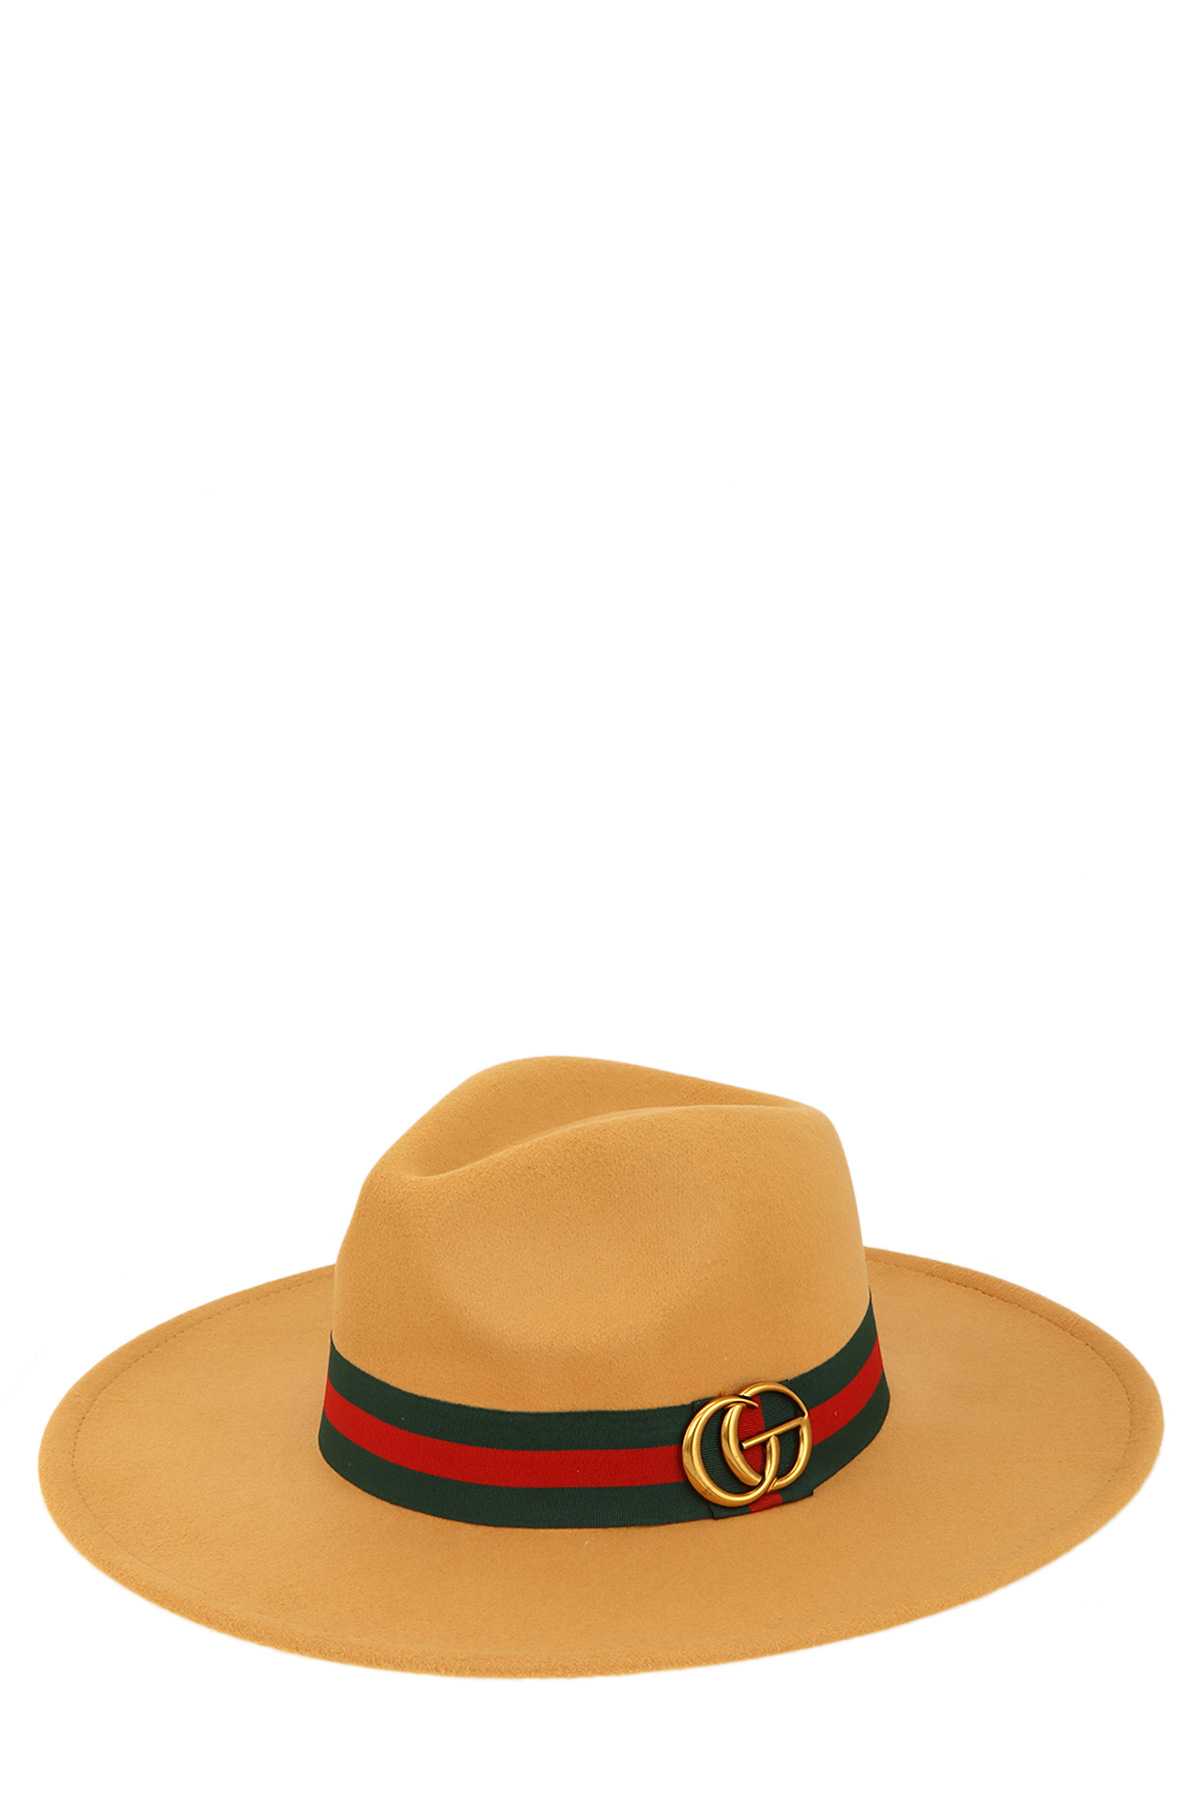 GO Charm with Stripe Band Fedora Hat